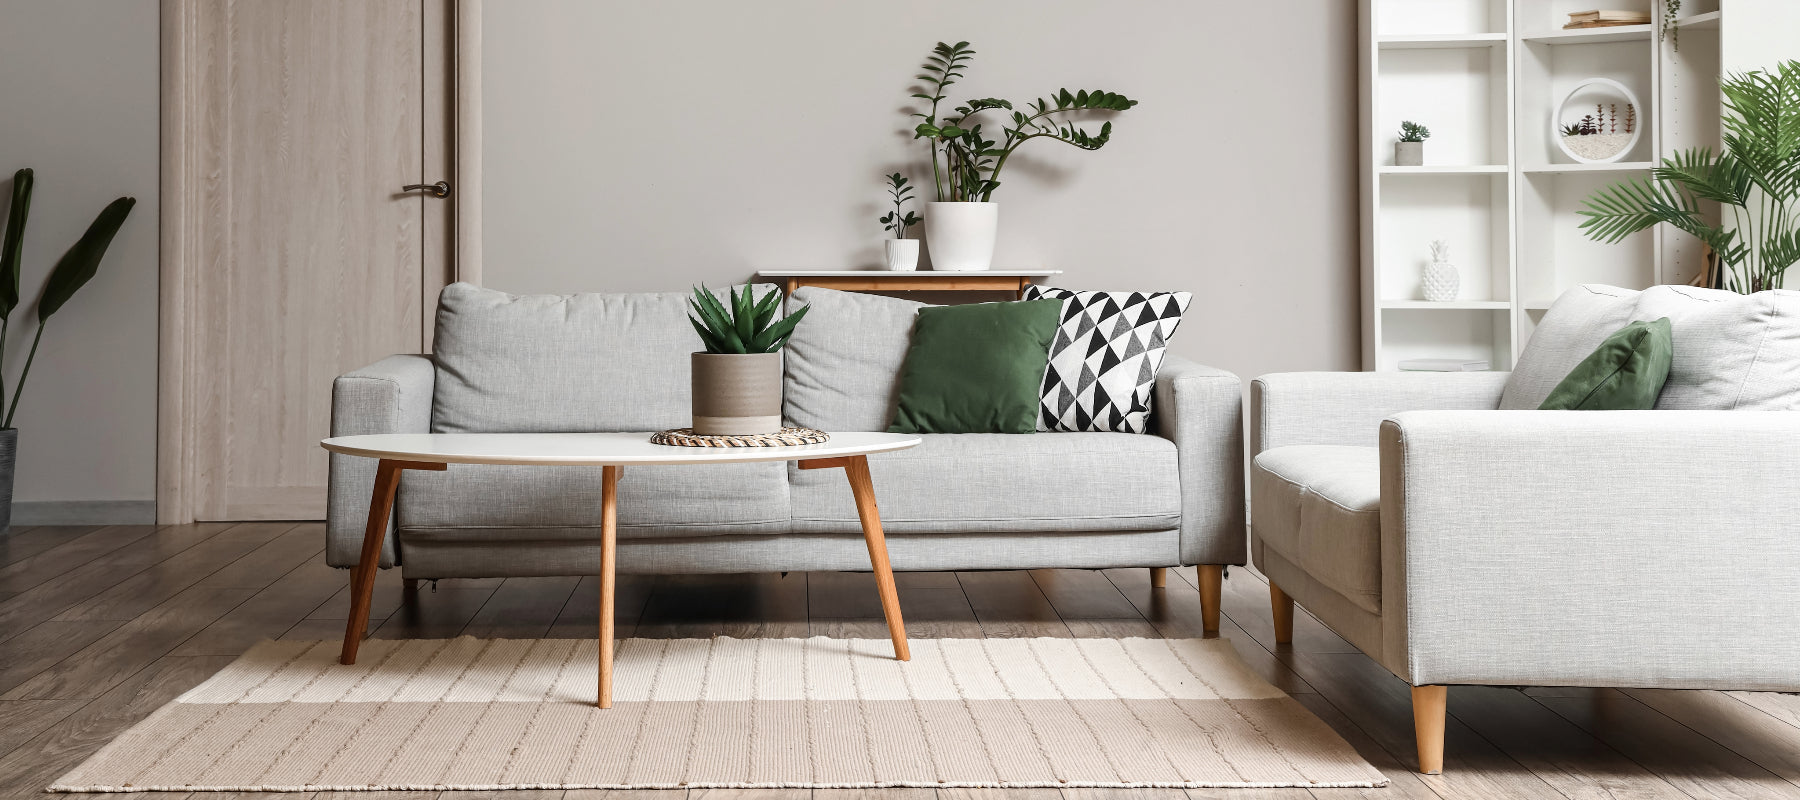 STYLING / Scandinavian Style Indoor Greenery